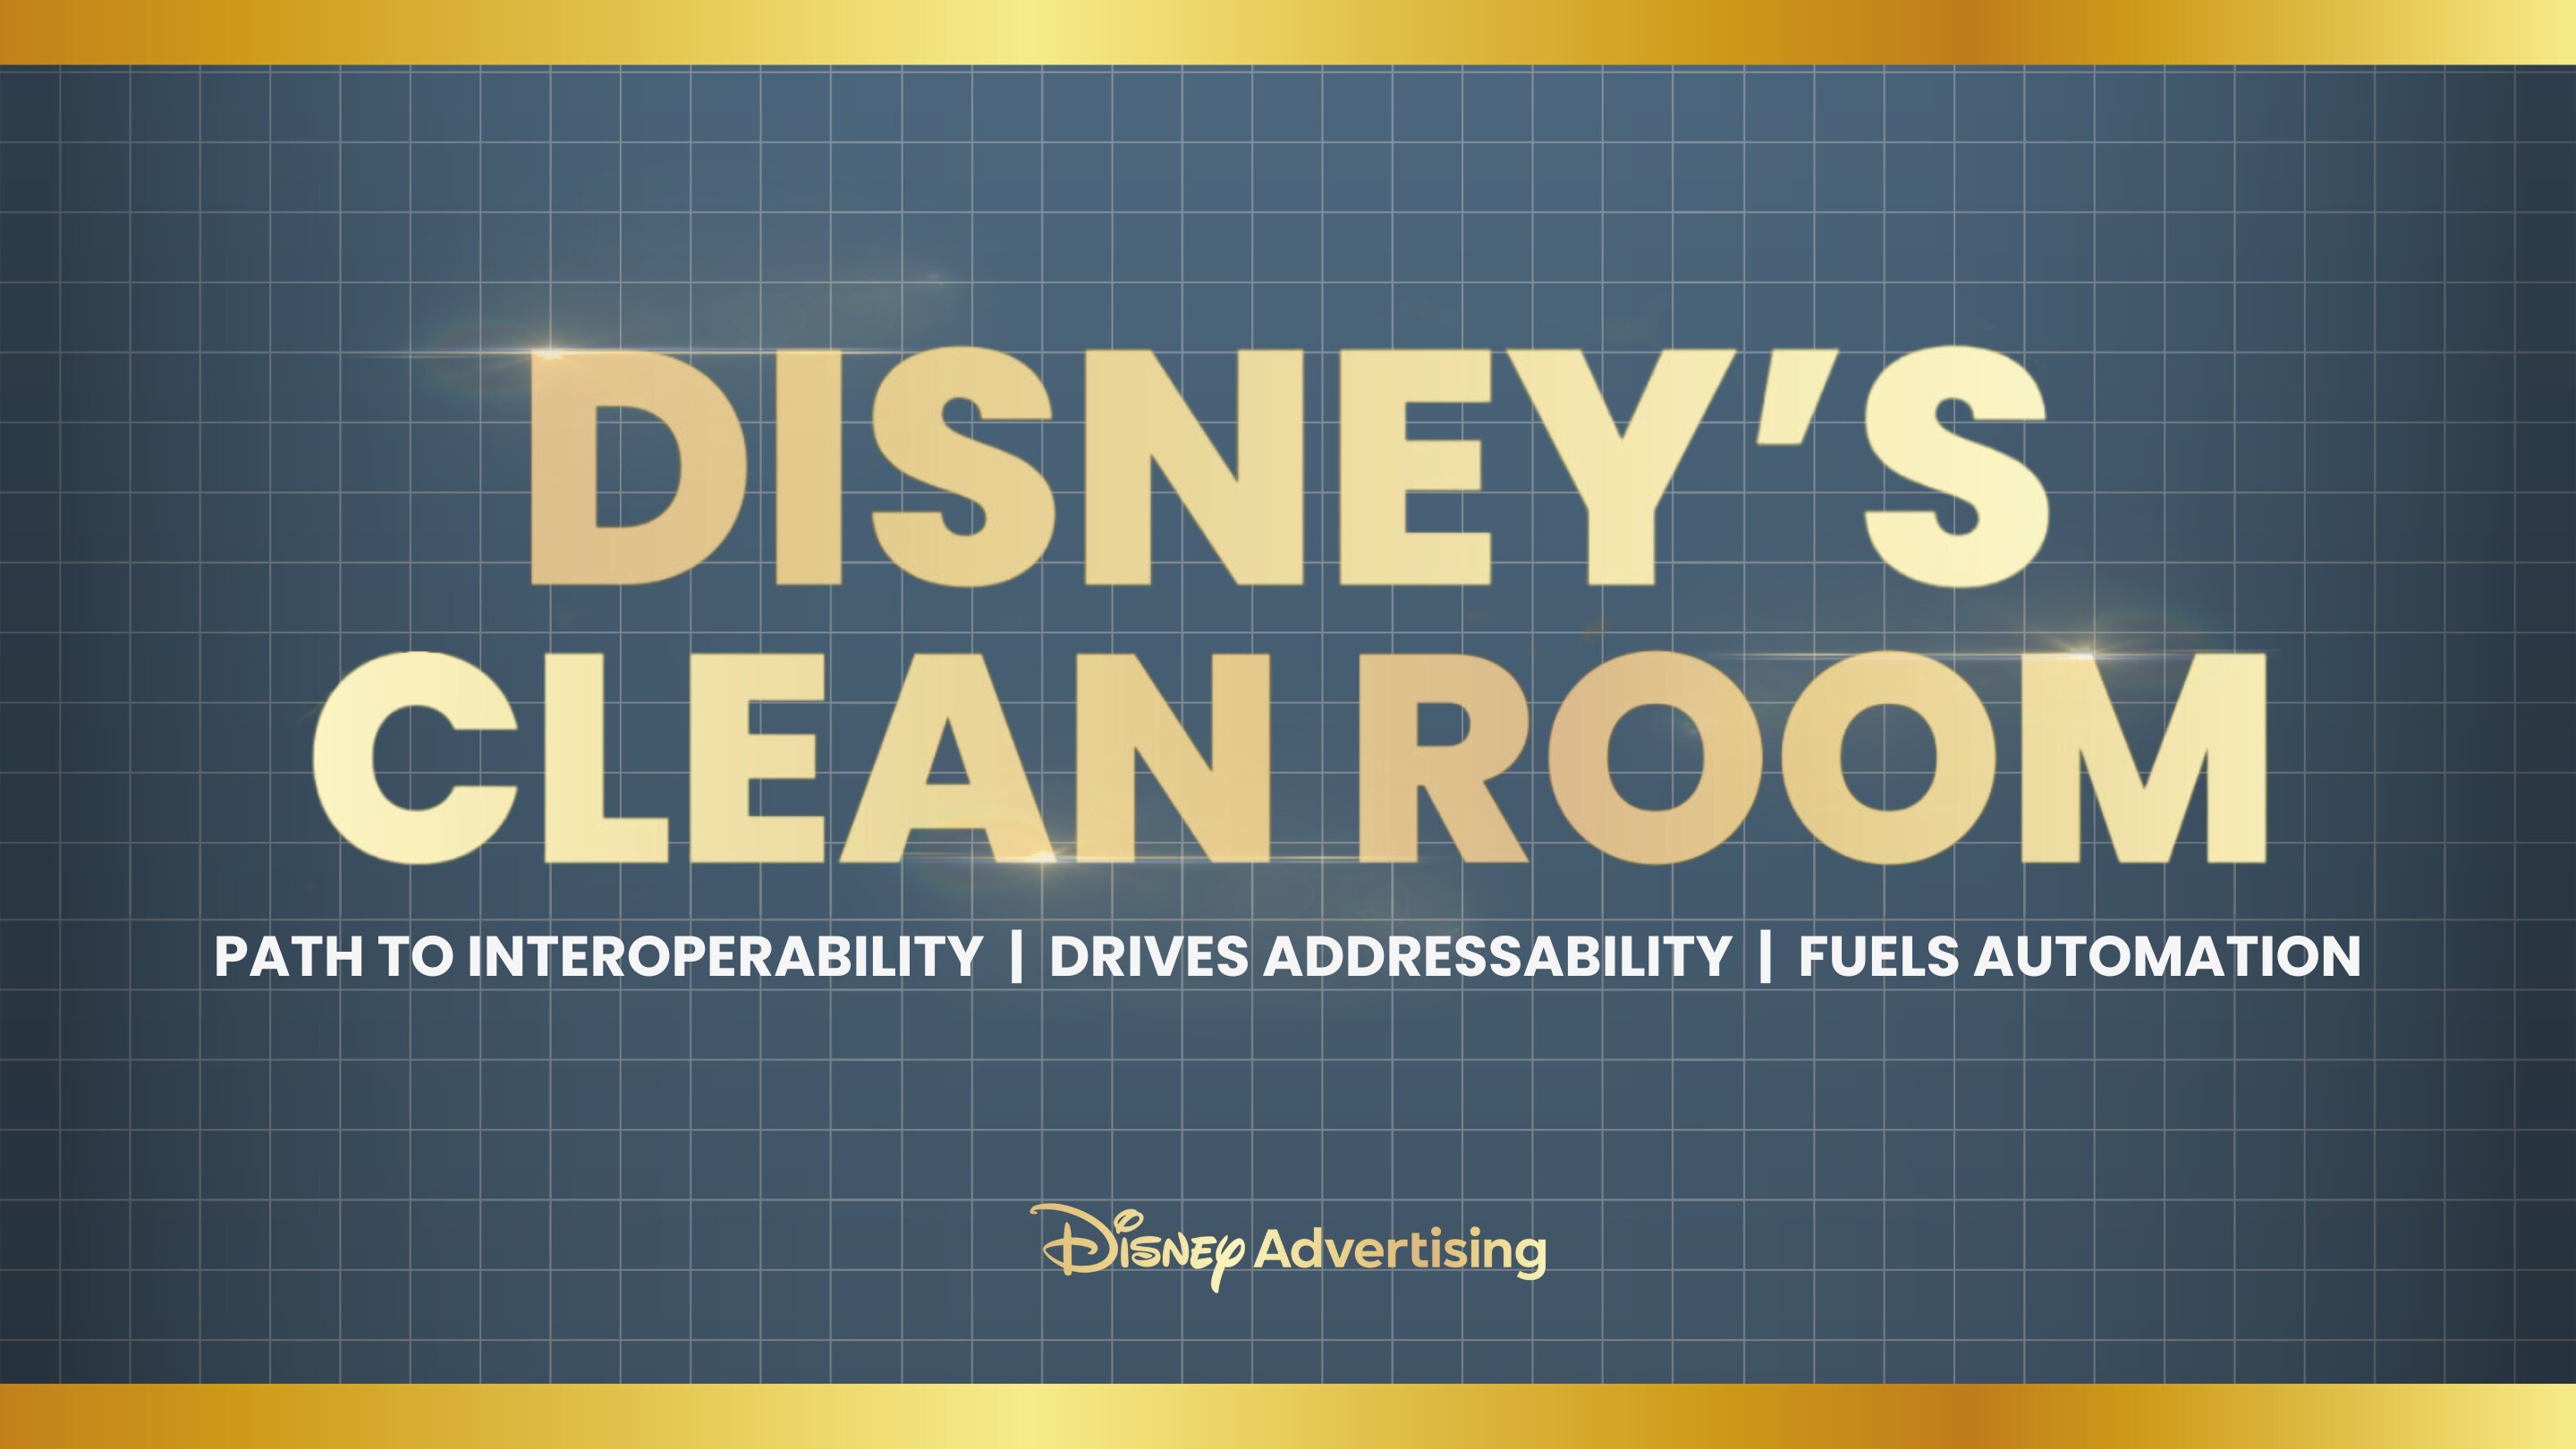 Disneys Award-Winning Clean Room Solution Celebrates Rapid Adoption